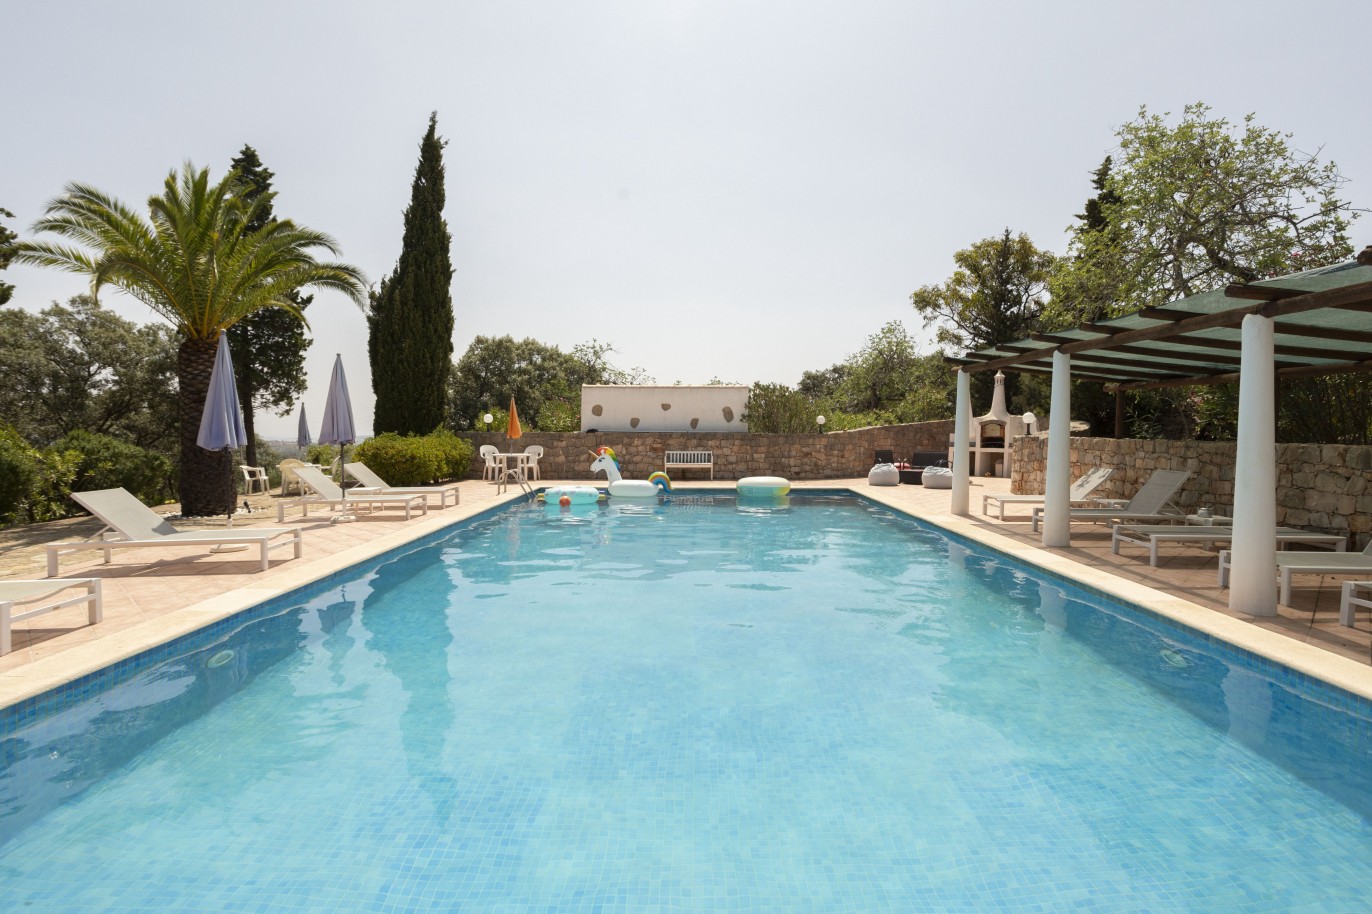 7 Bed Country Villa with swimming pool for sale in Estoi, Algarve_230971